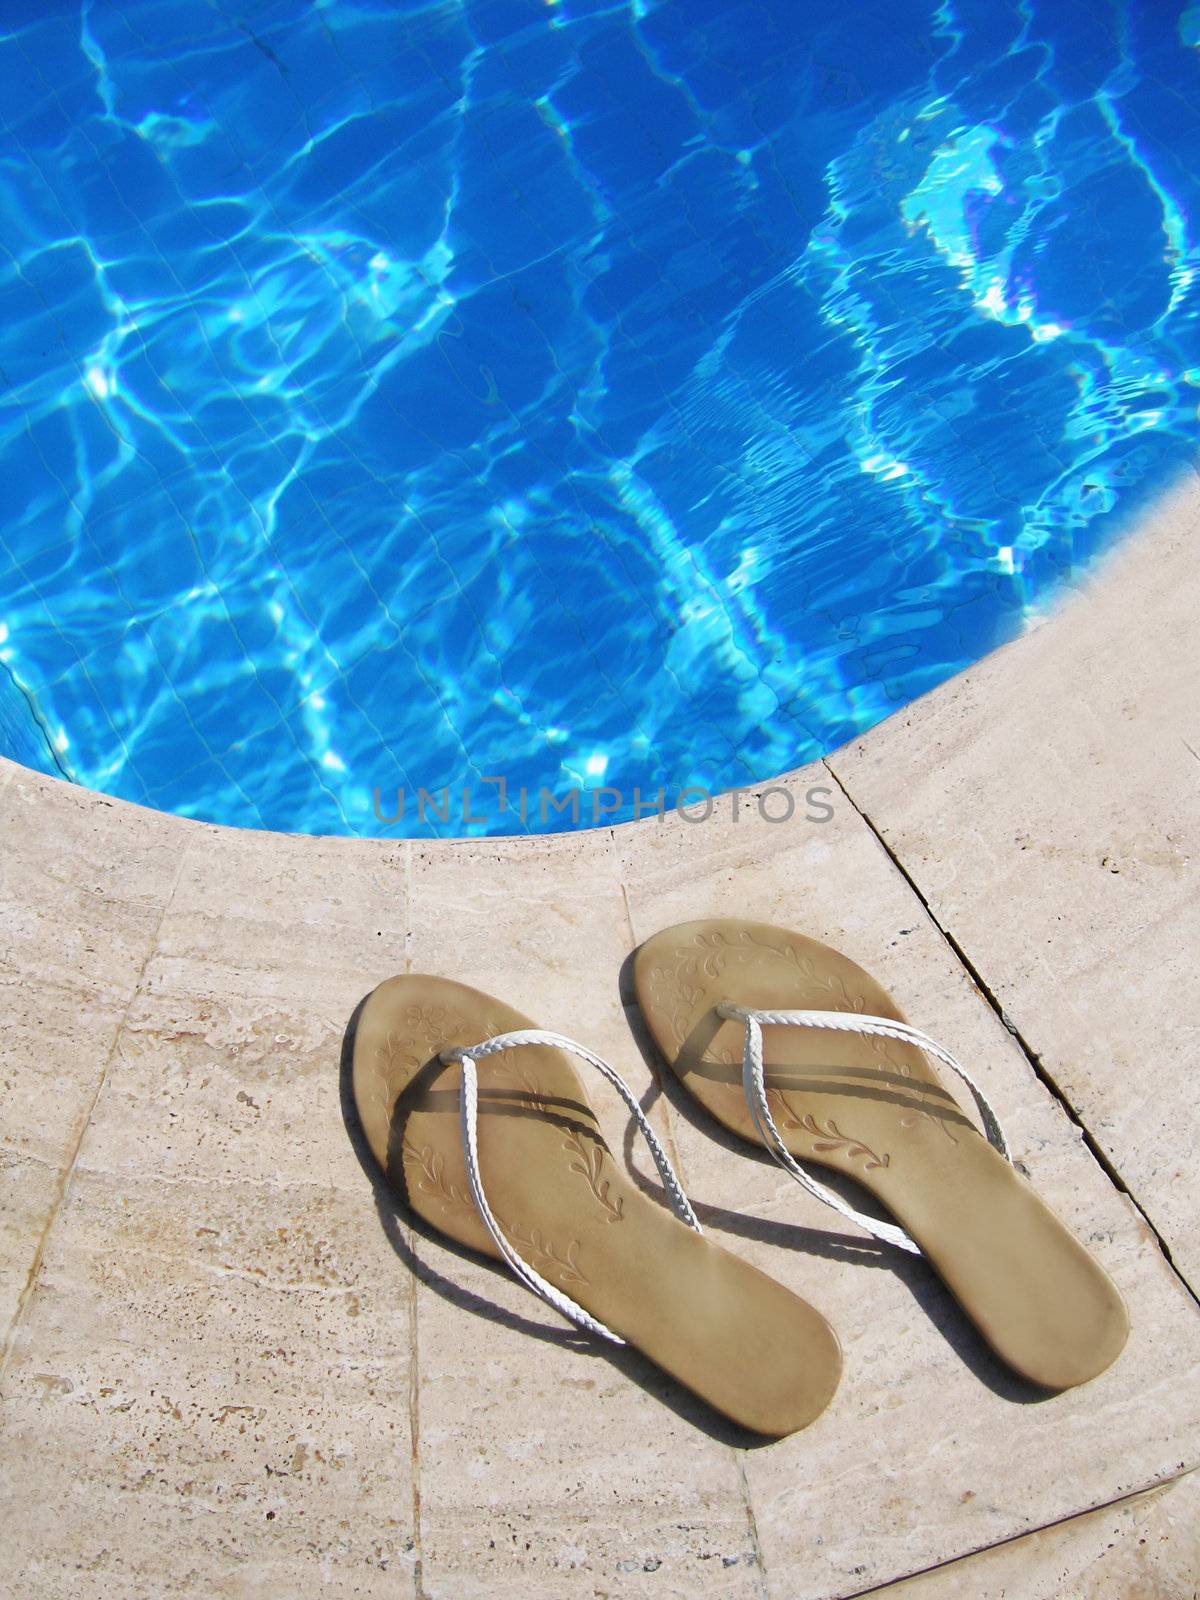 flip-flops by blue swimming pool